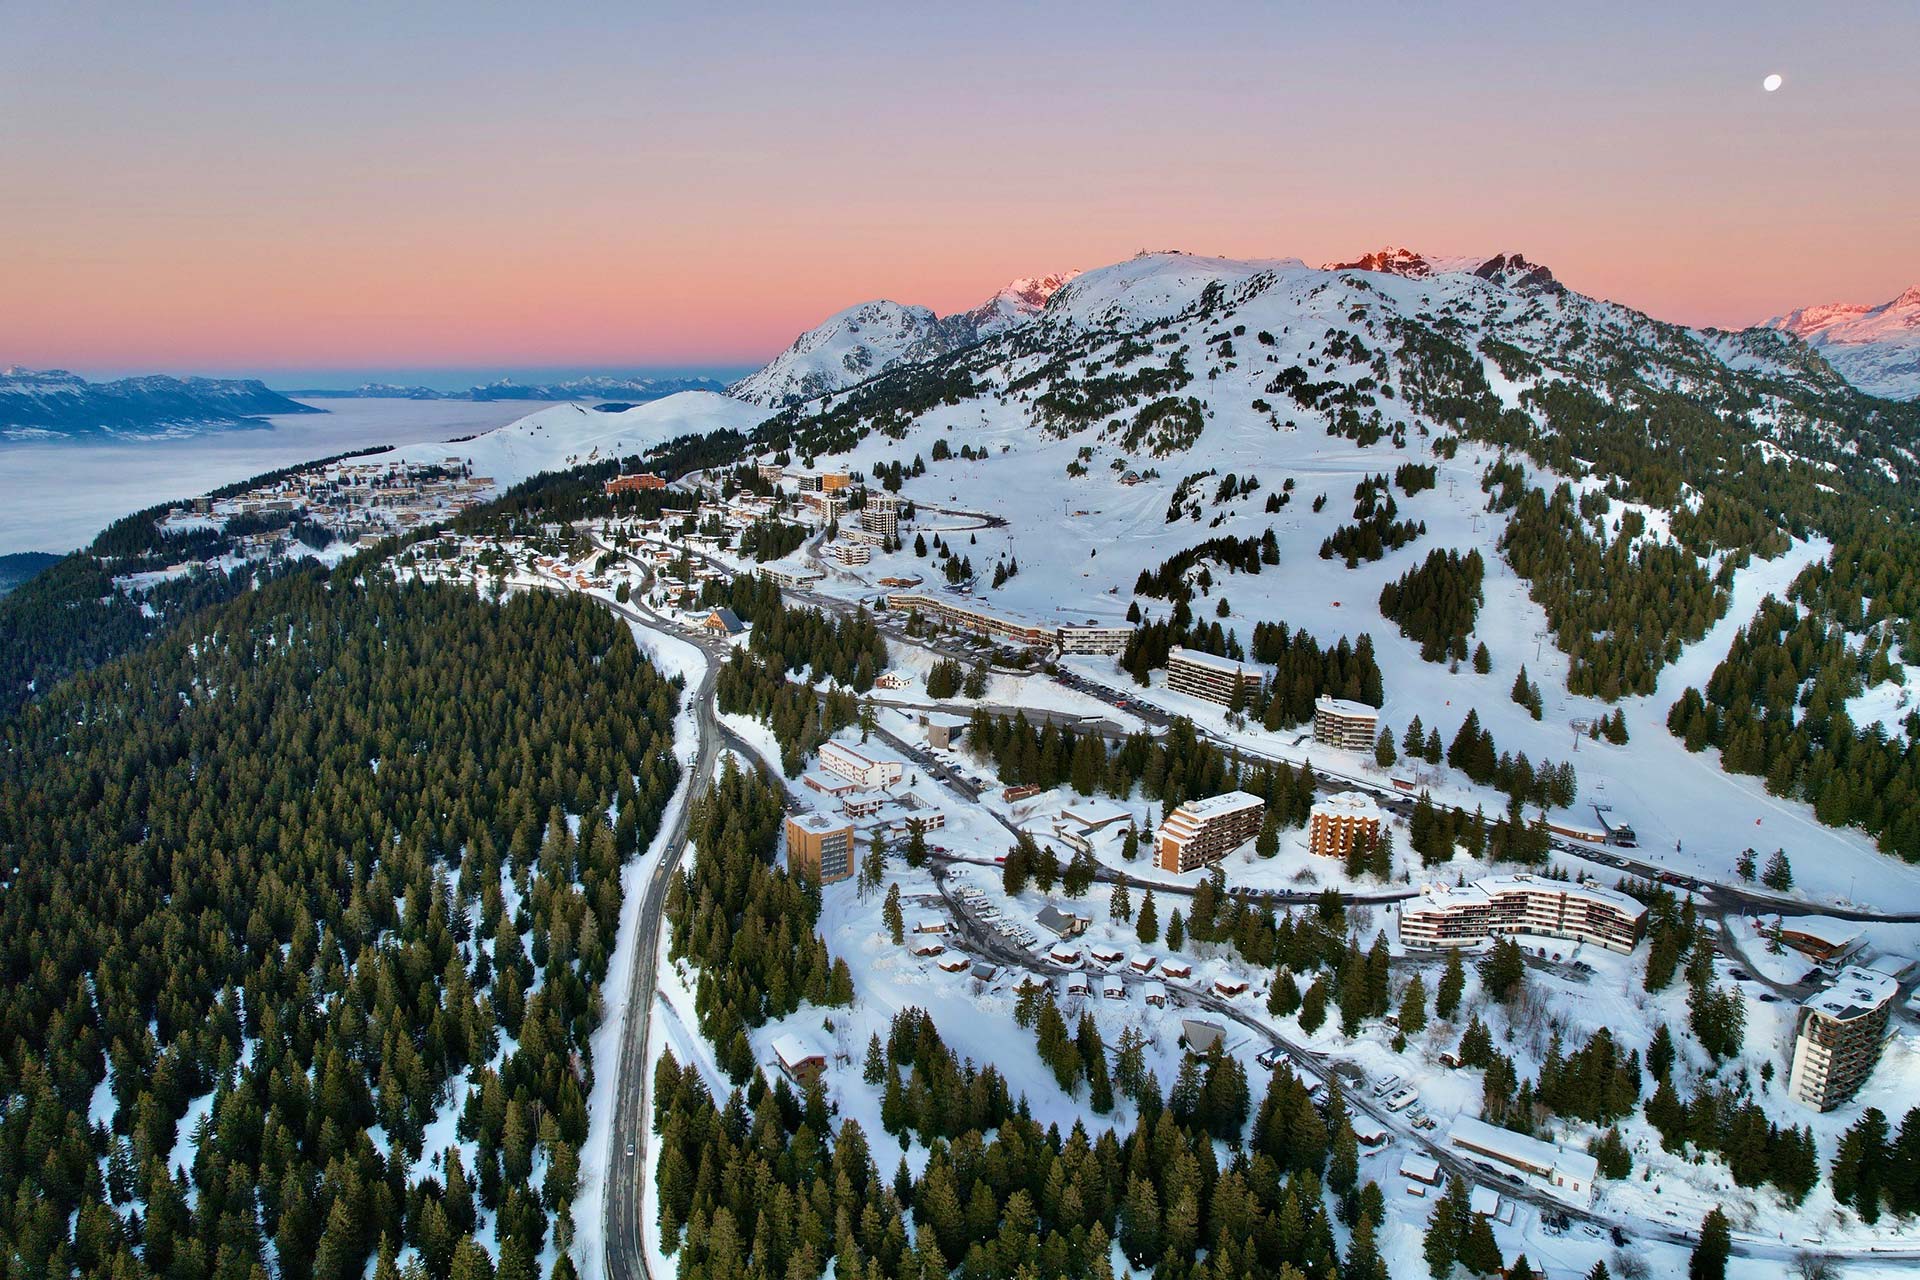 Chamrousse sunset drone view roche béranger ski resort montagne belledonne grenoble isere french alps france - © @drouot_pictures Instagram